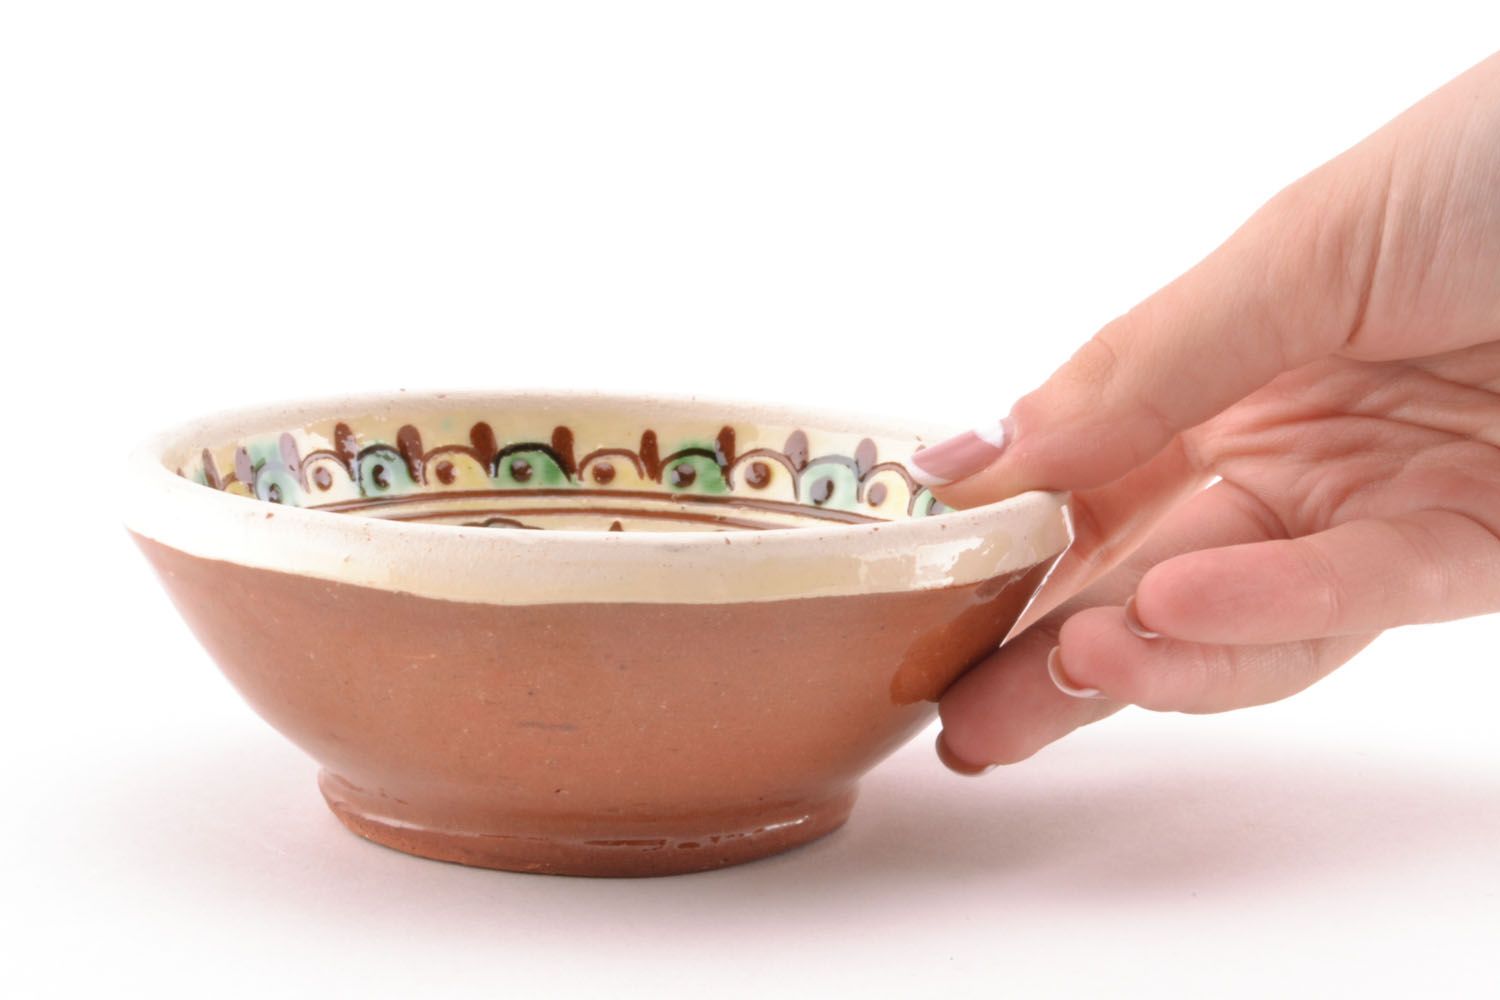 5 8 oz ceramic glazed village-style handmade pitch bowl 0,45 lb photo 5